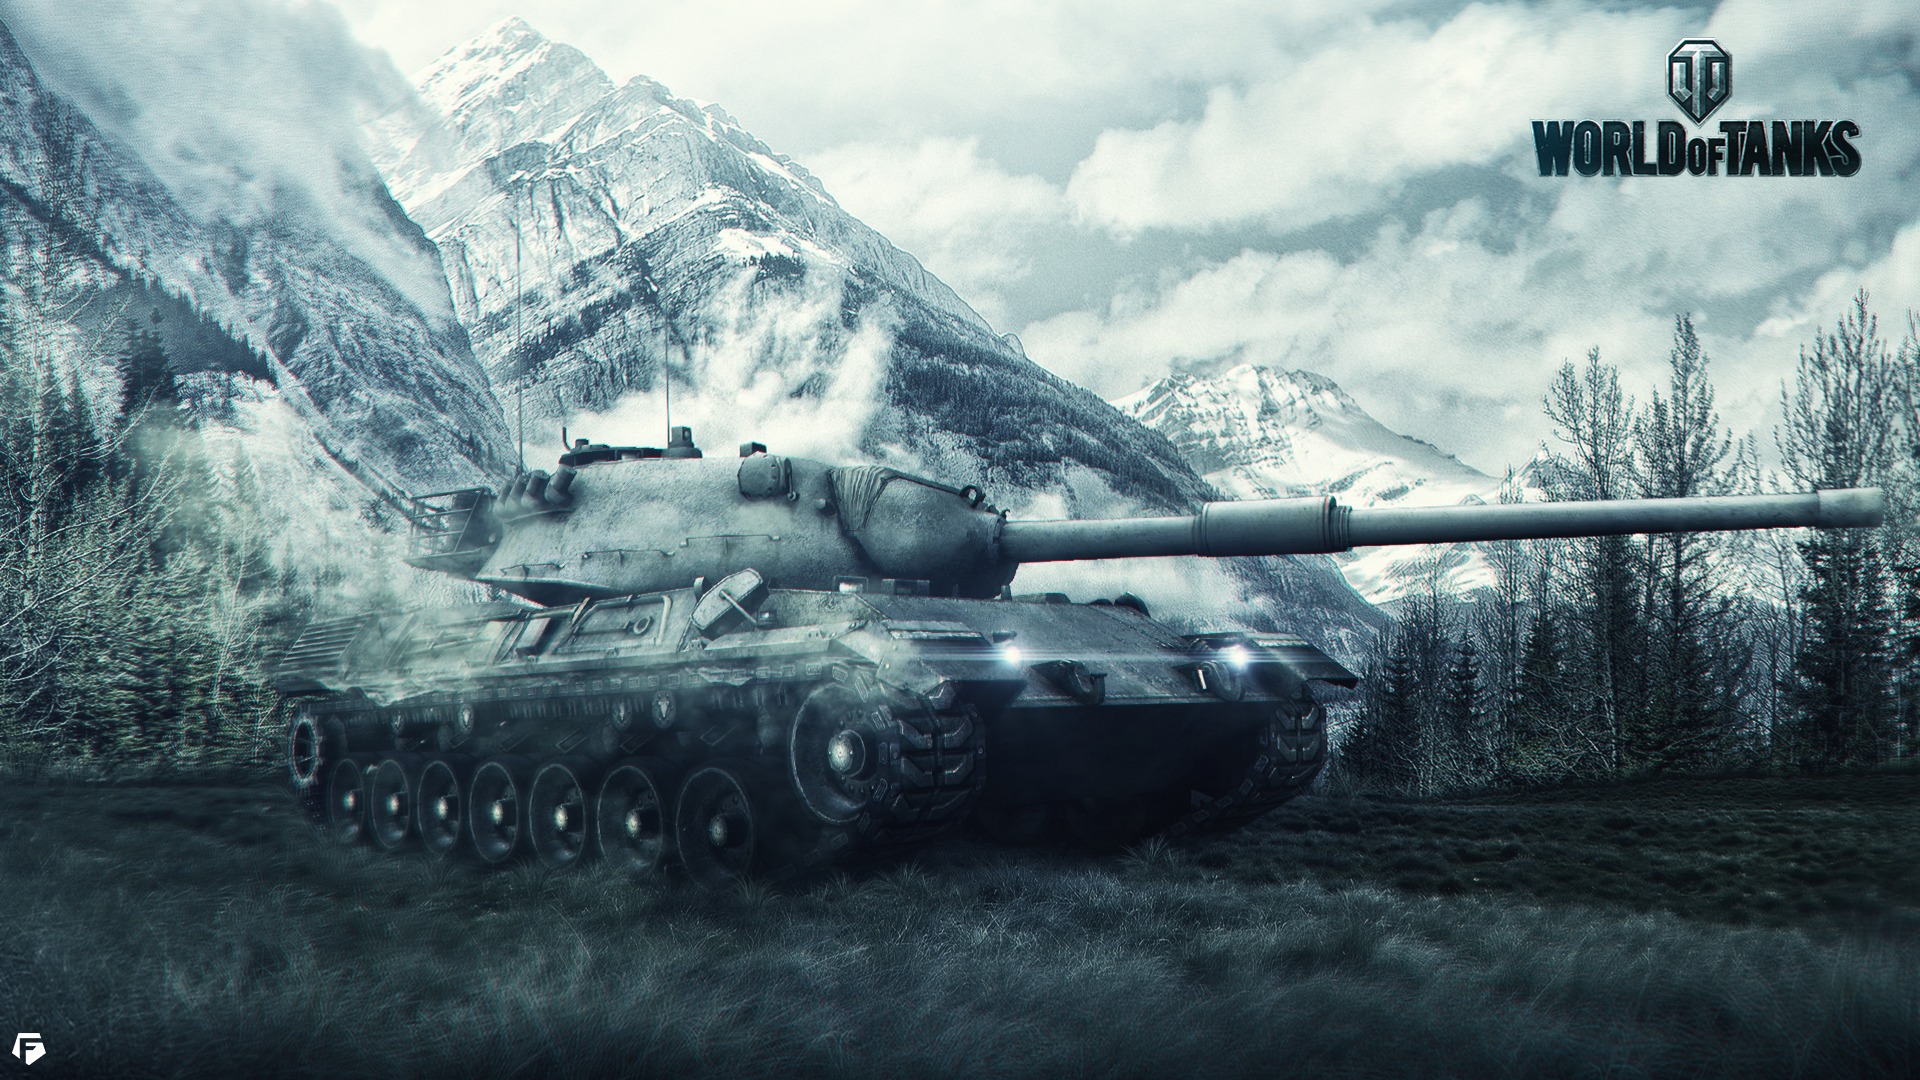 Старая версия обои. Леопард 1 World of Tanks. Танк Leopard 1. Ворлд оф танк Leopard_1. Леопард 1 танк WOT.